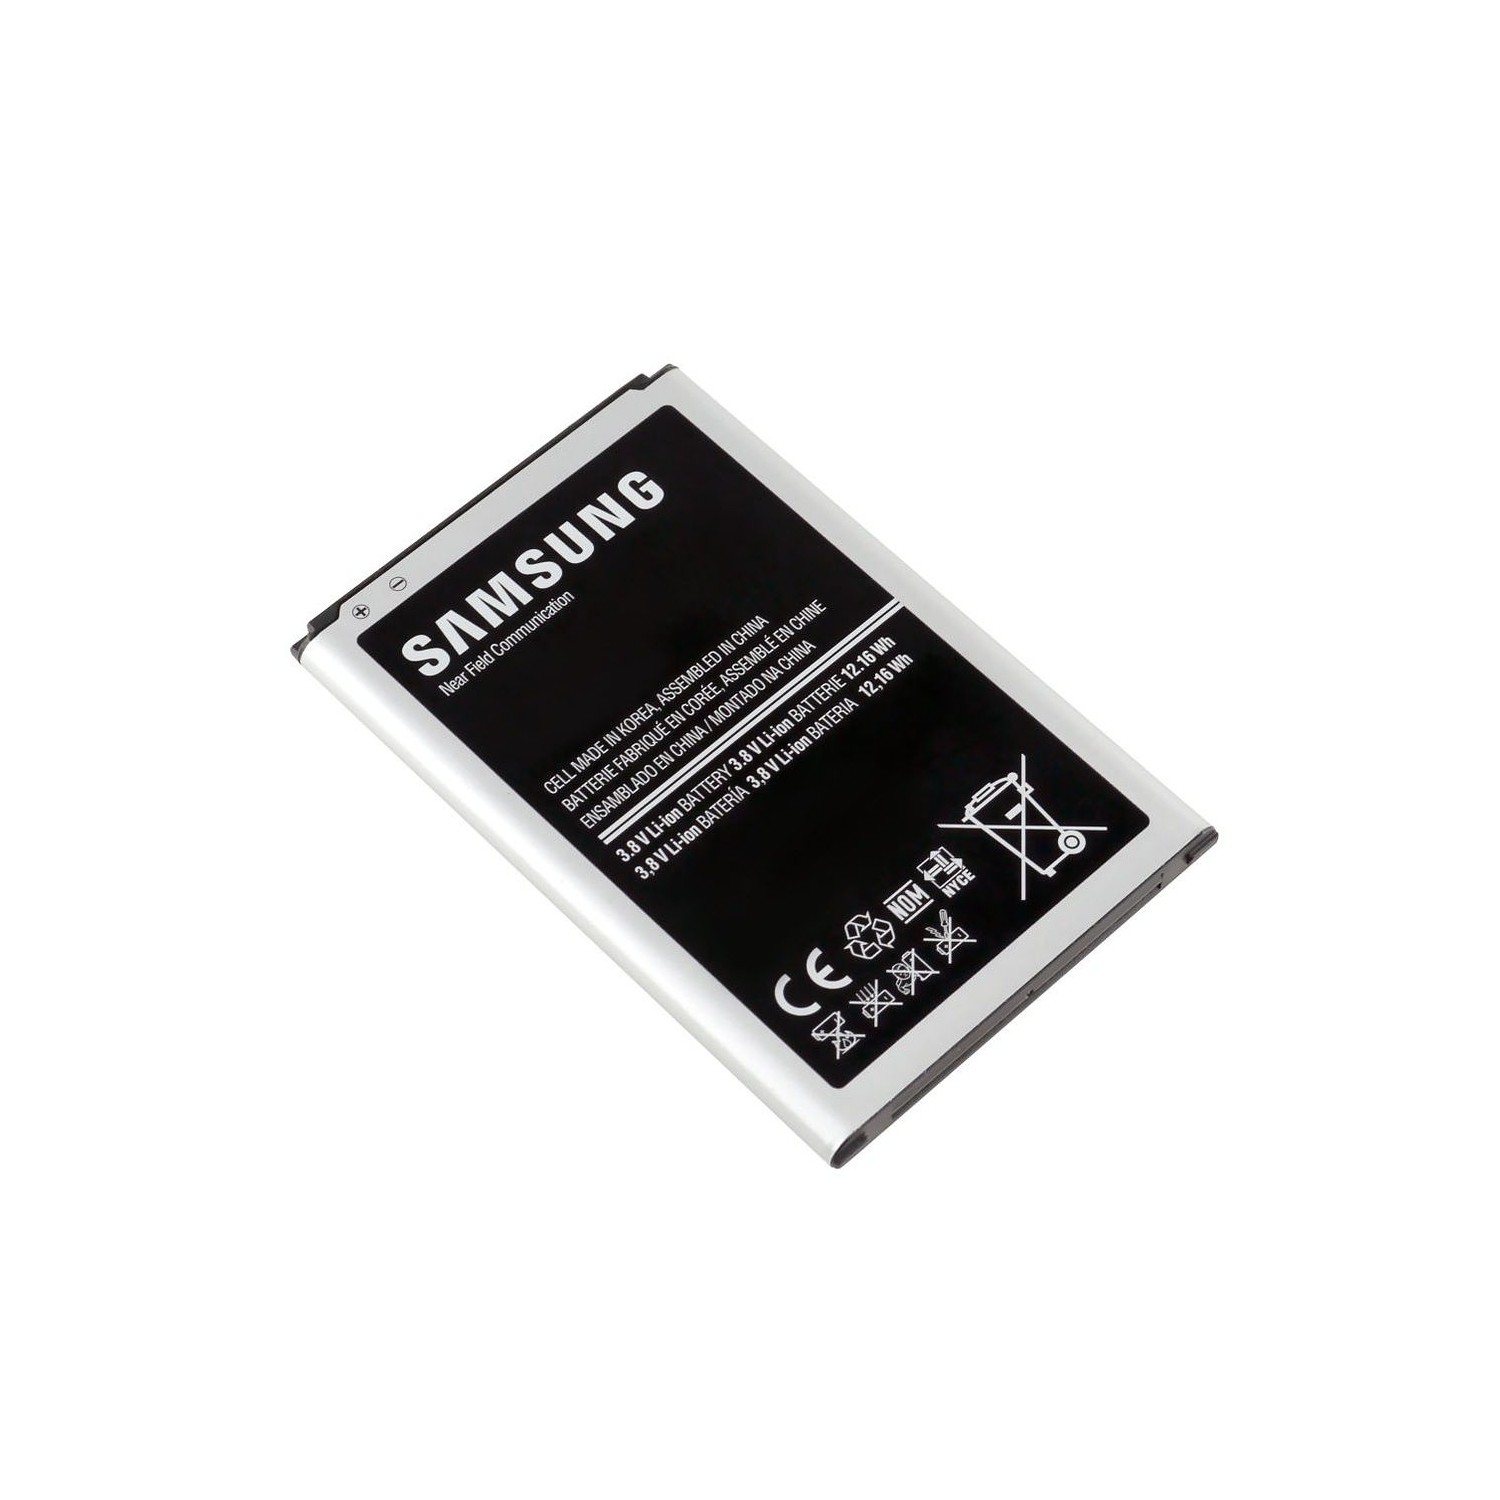 Samsung Galaxy Note III N9000 Battery OEM B800BU - Open Box